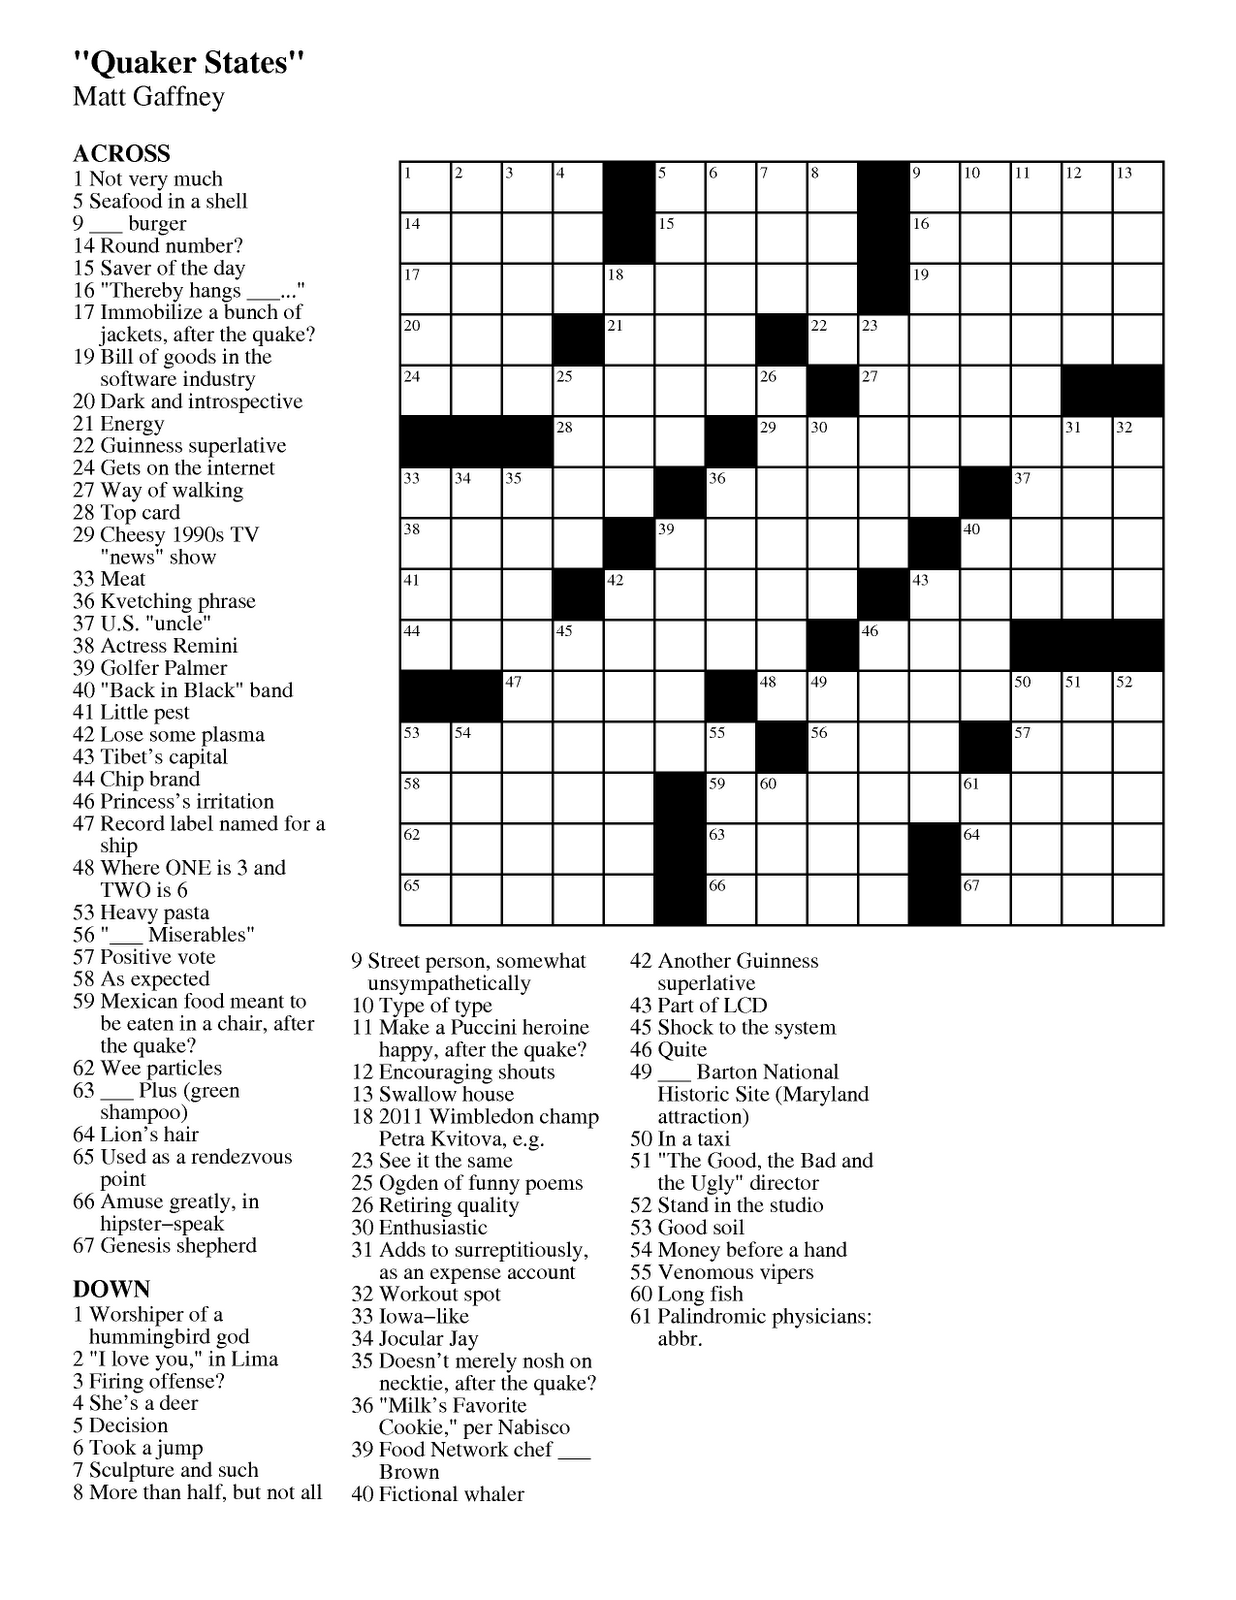 Matt Gaffney's Weekly Crossword Contest: MGWCC #170 -- Friday, September 2, 2011 -- "Quaker States"